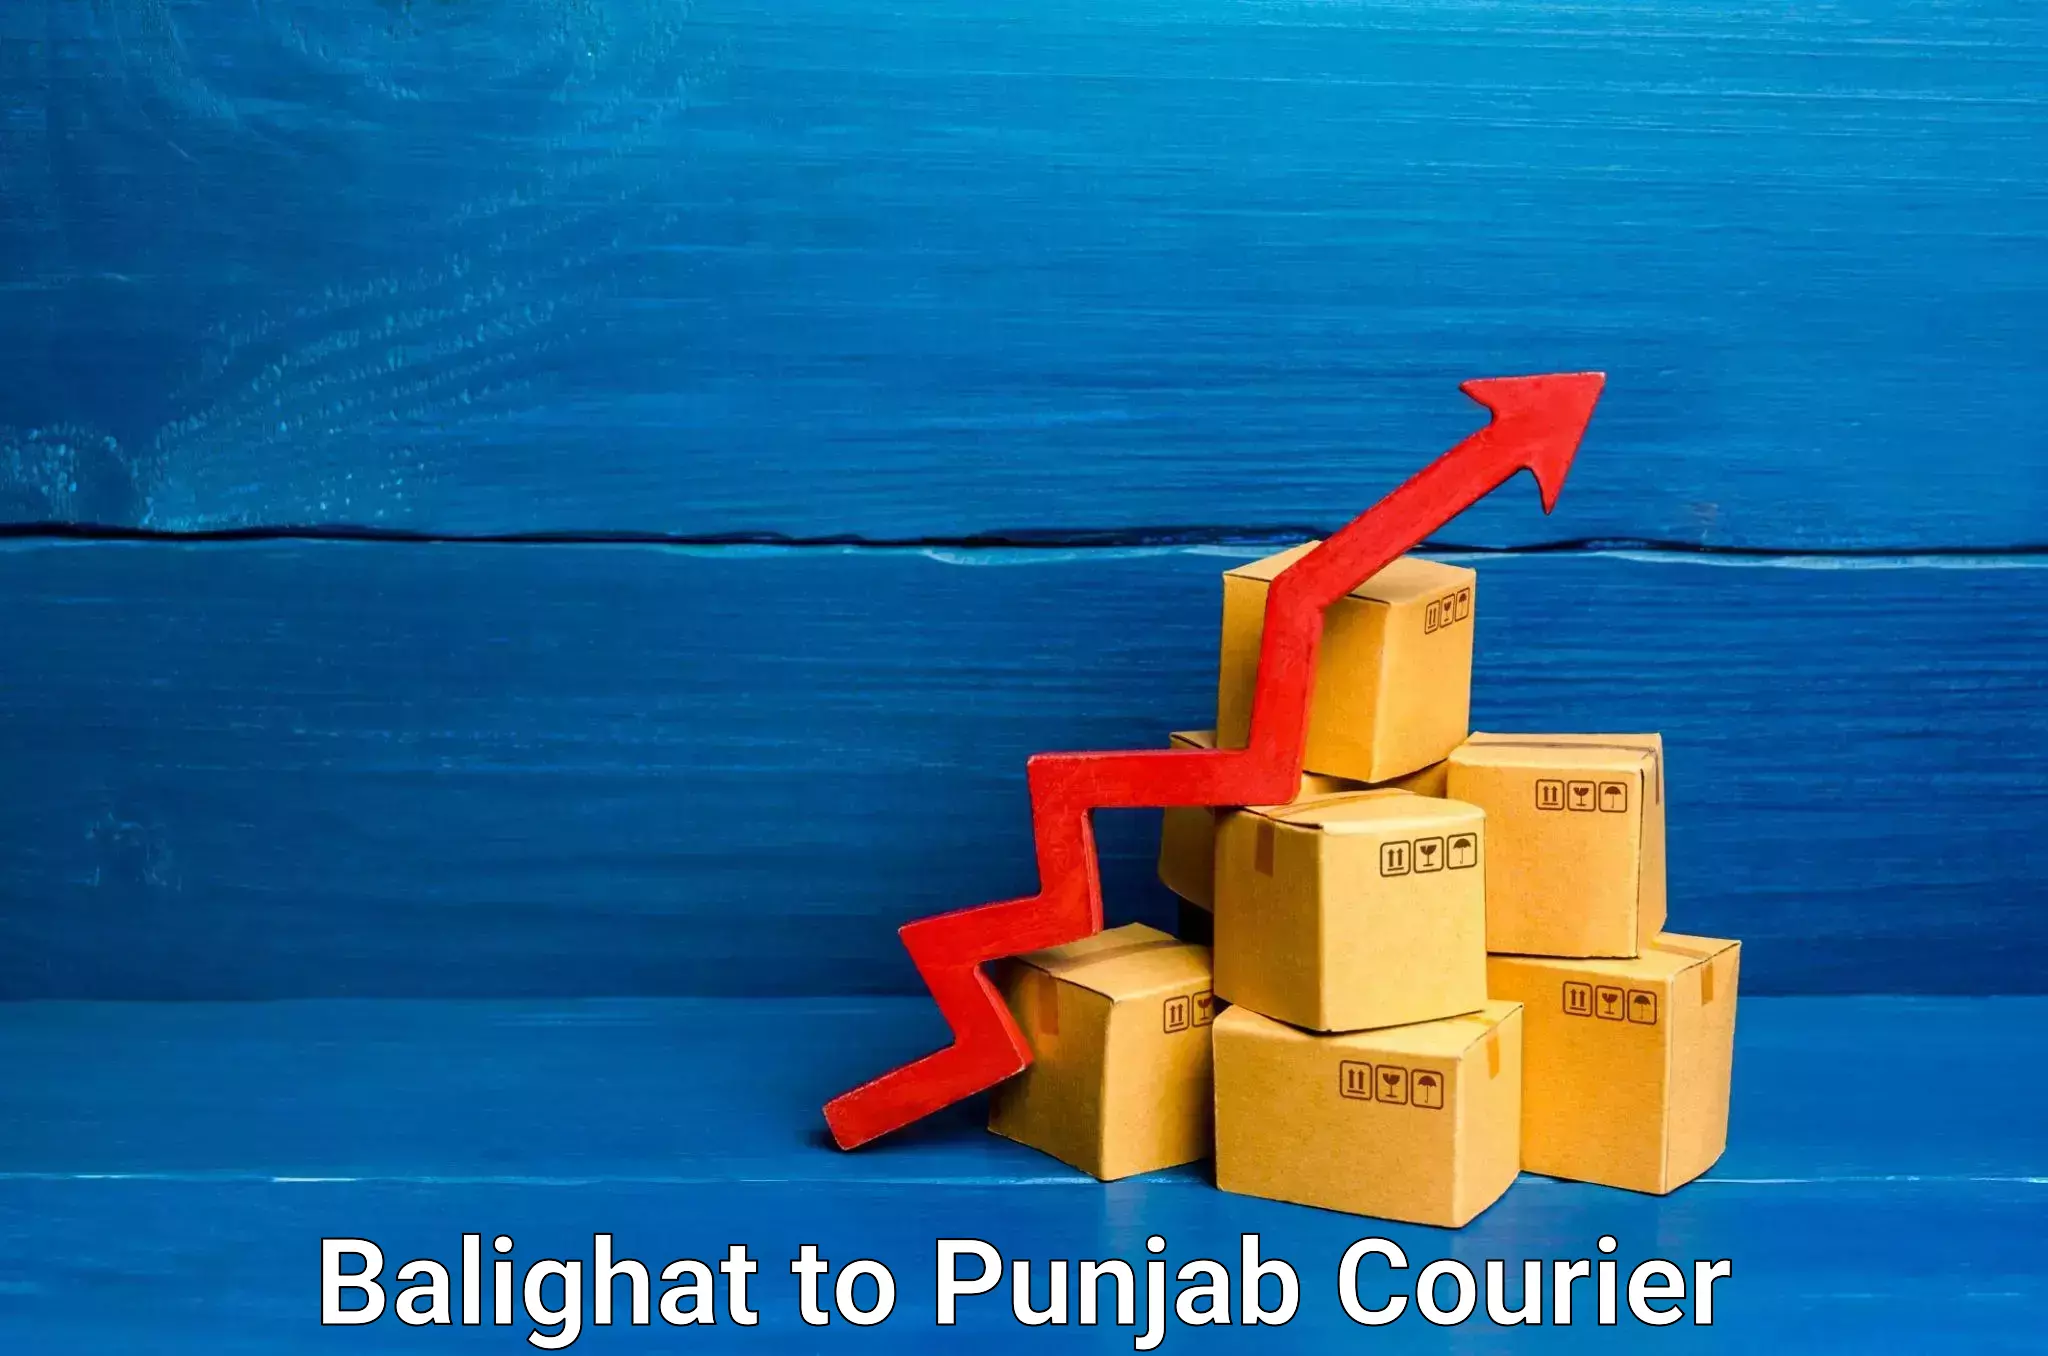 Digital courier platforms Balighat to Muktsar